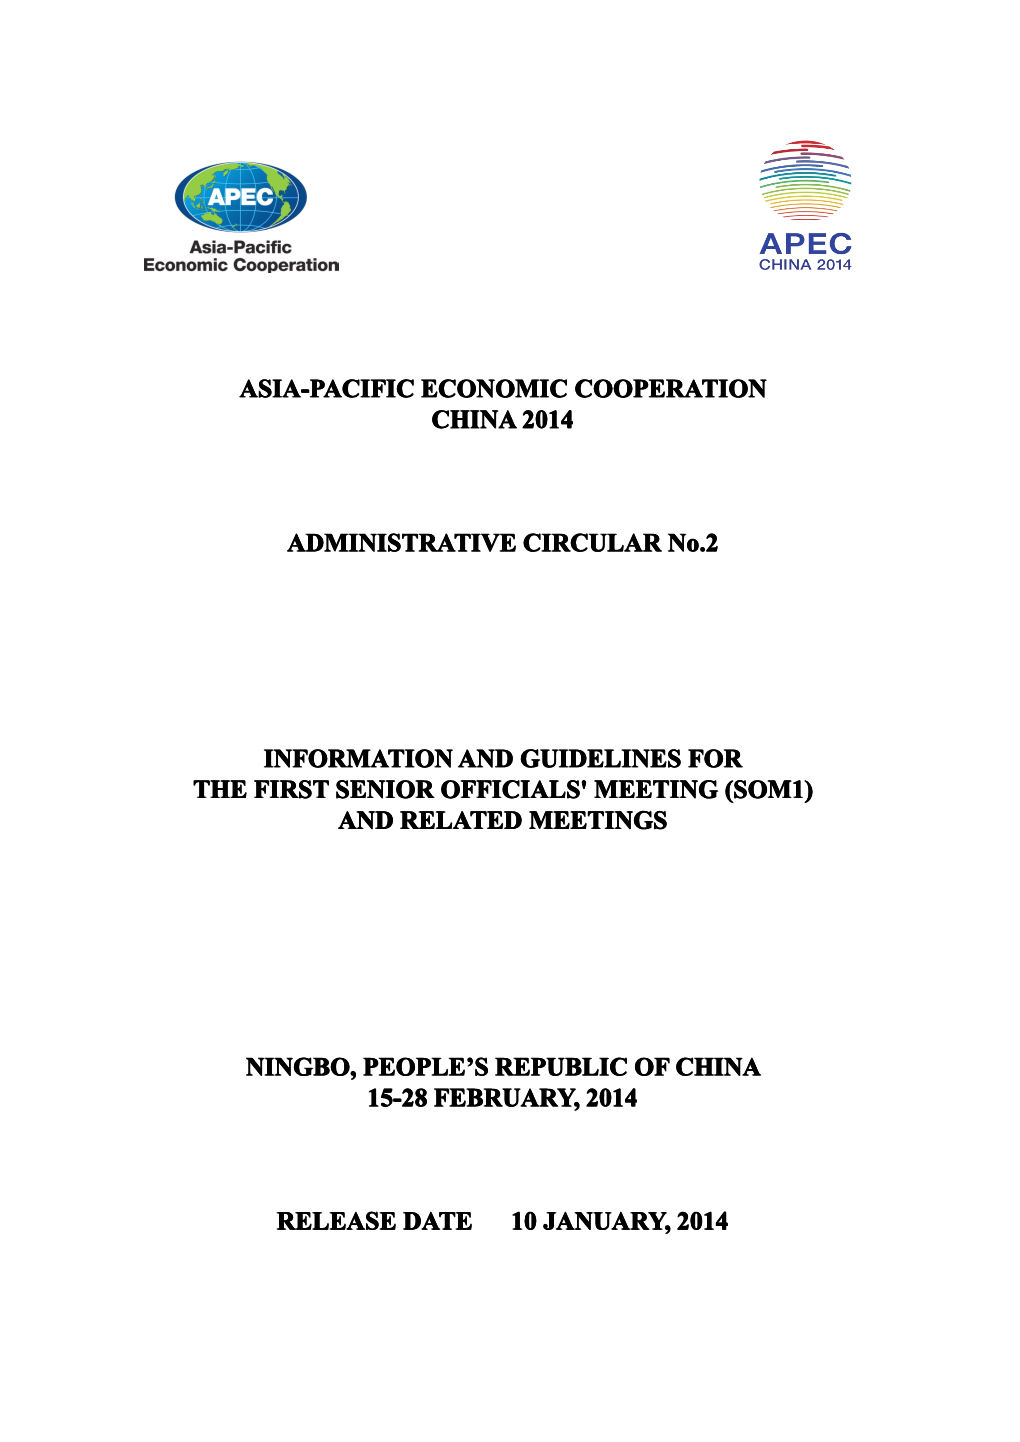 Asia-Pacific Economic Cooperation China 2014